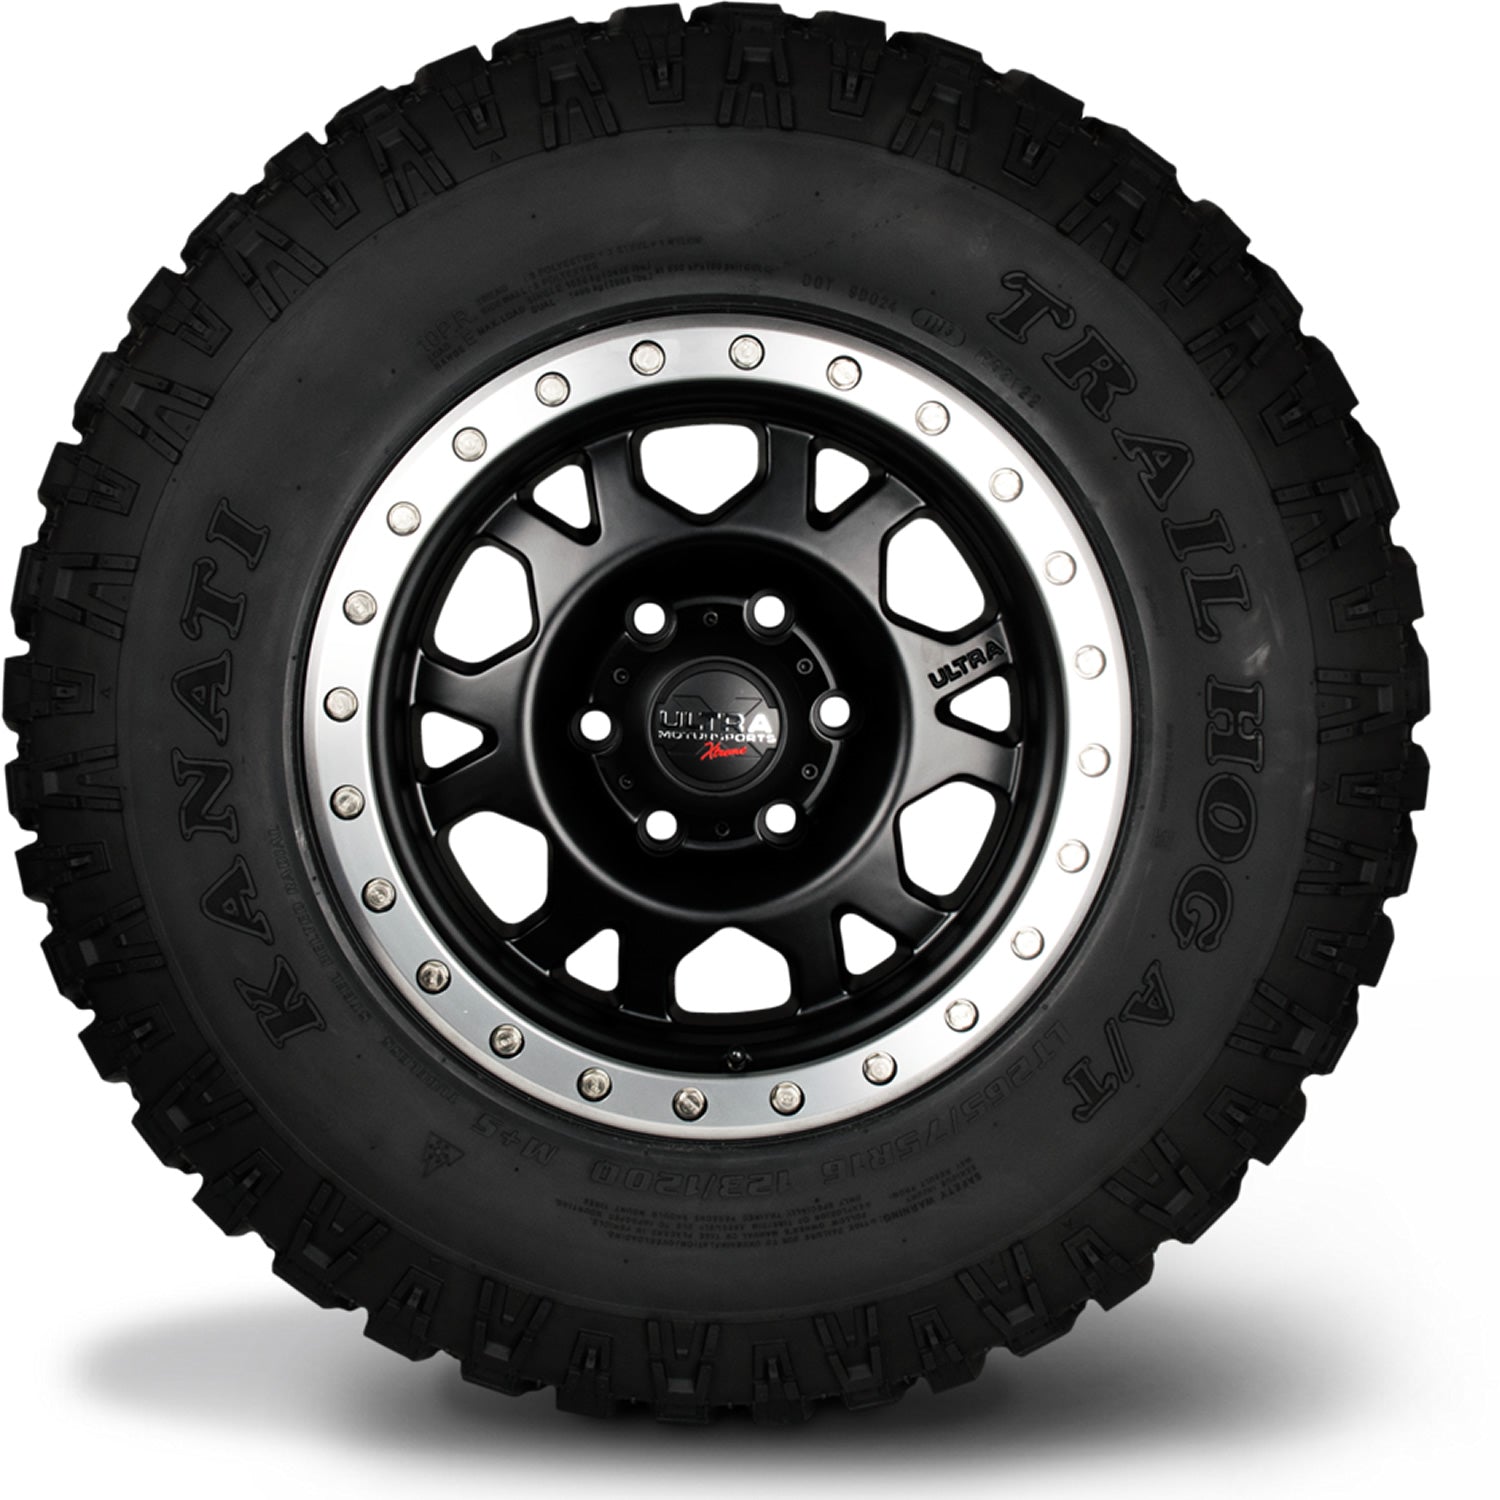 KANATI TRAIL HOG LT315/70R17 (34.5X12.4R 17) Tires